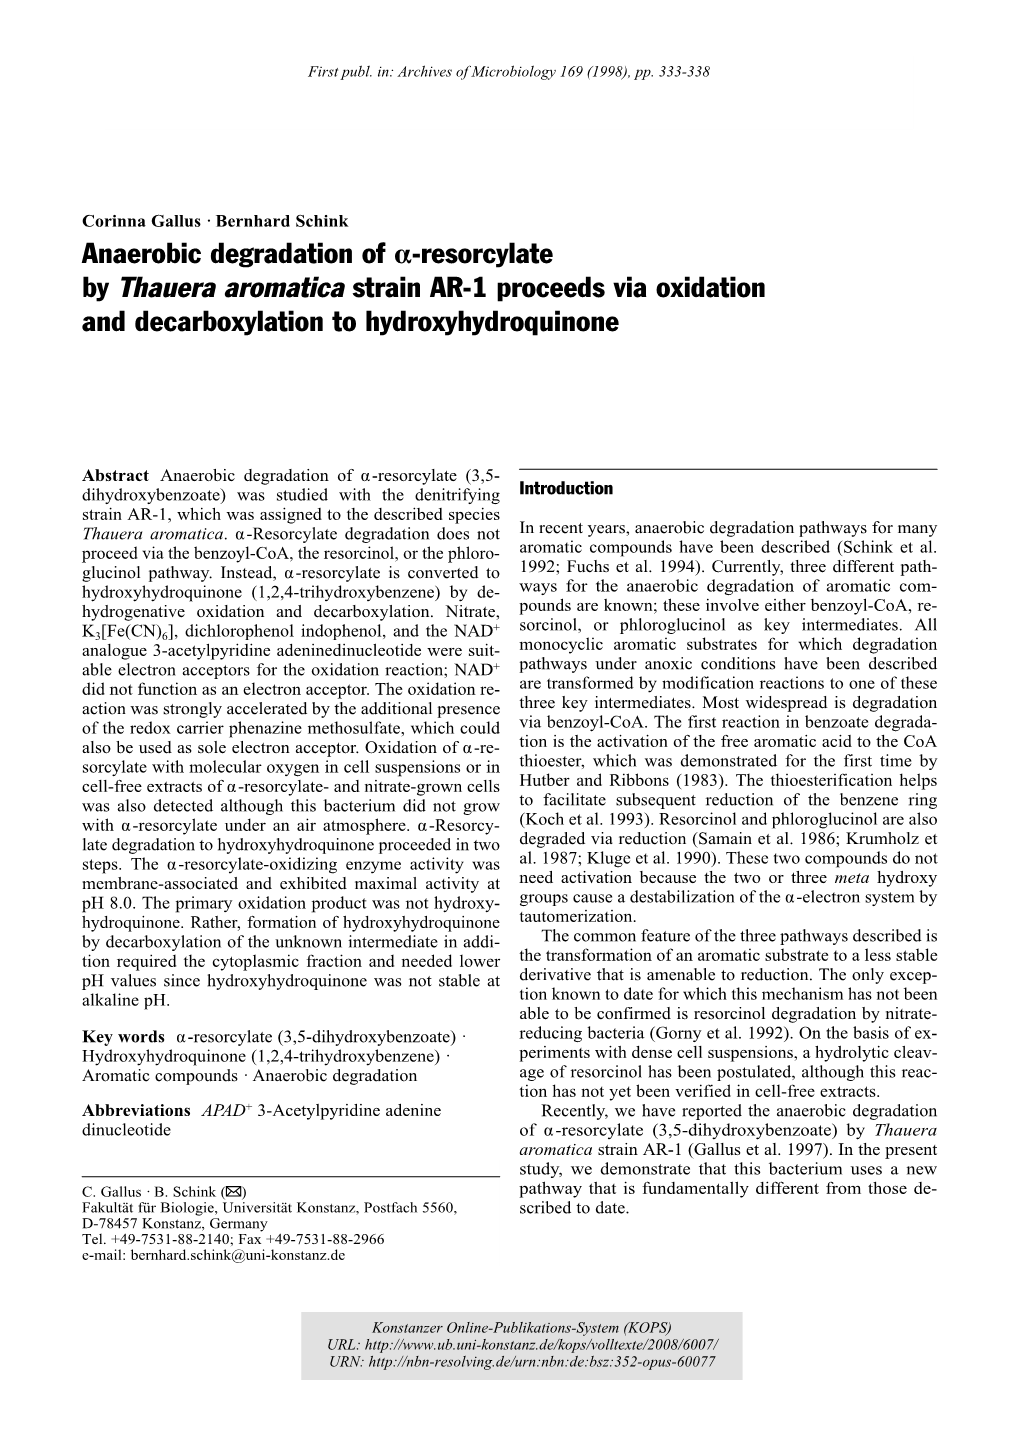 Anaerobic Degradation of Alpha-Resorcylate by Thauera